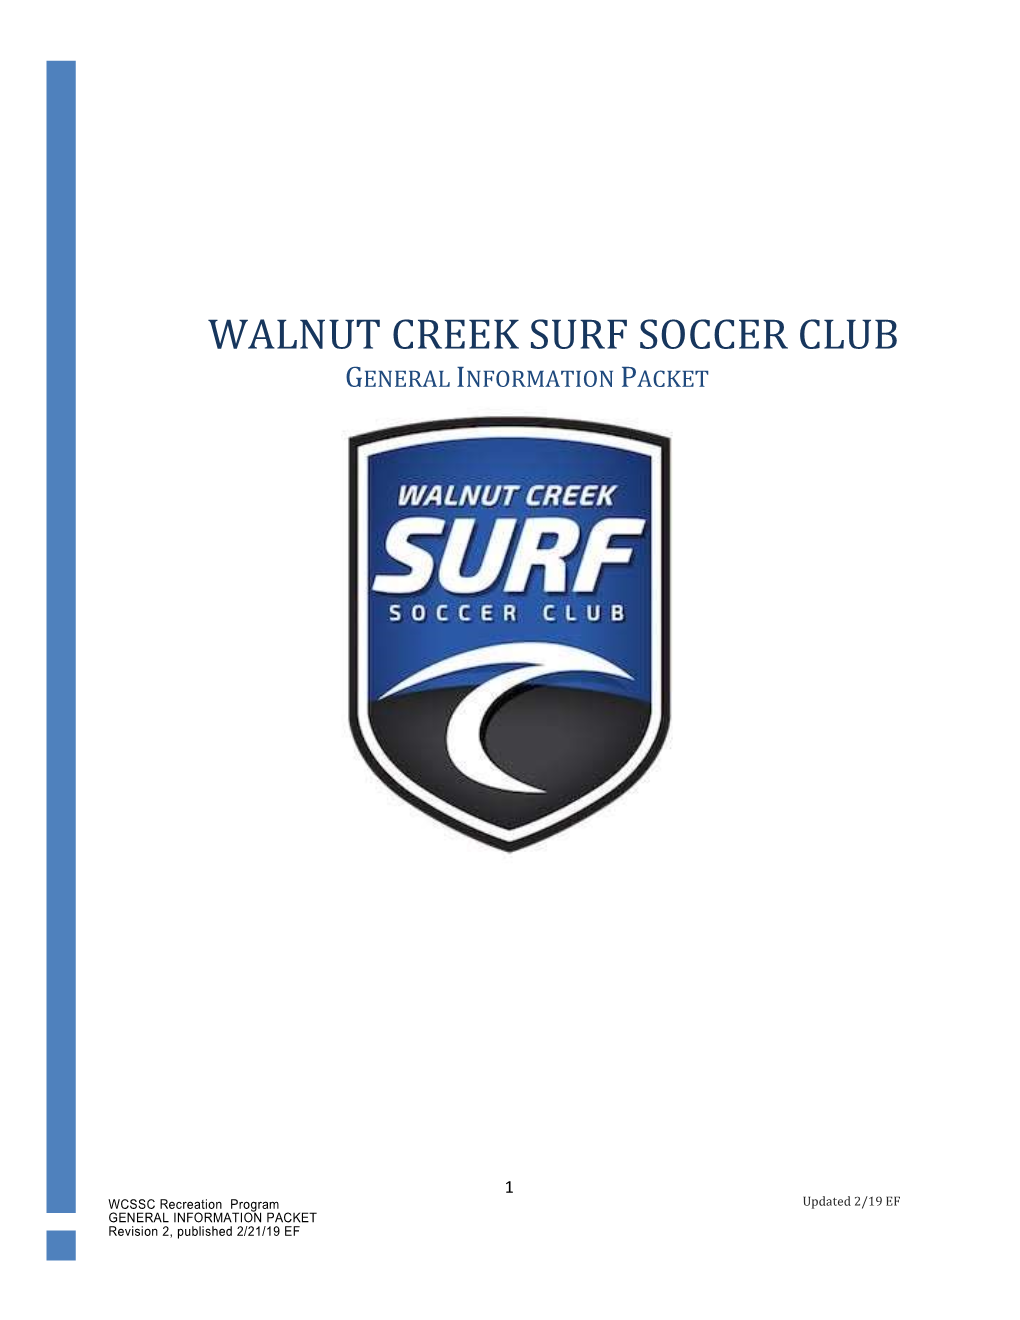 Walnut Creek Surf Soccer Club General Information Packet